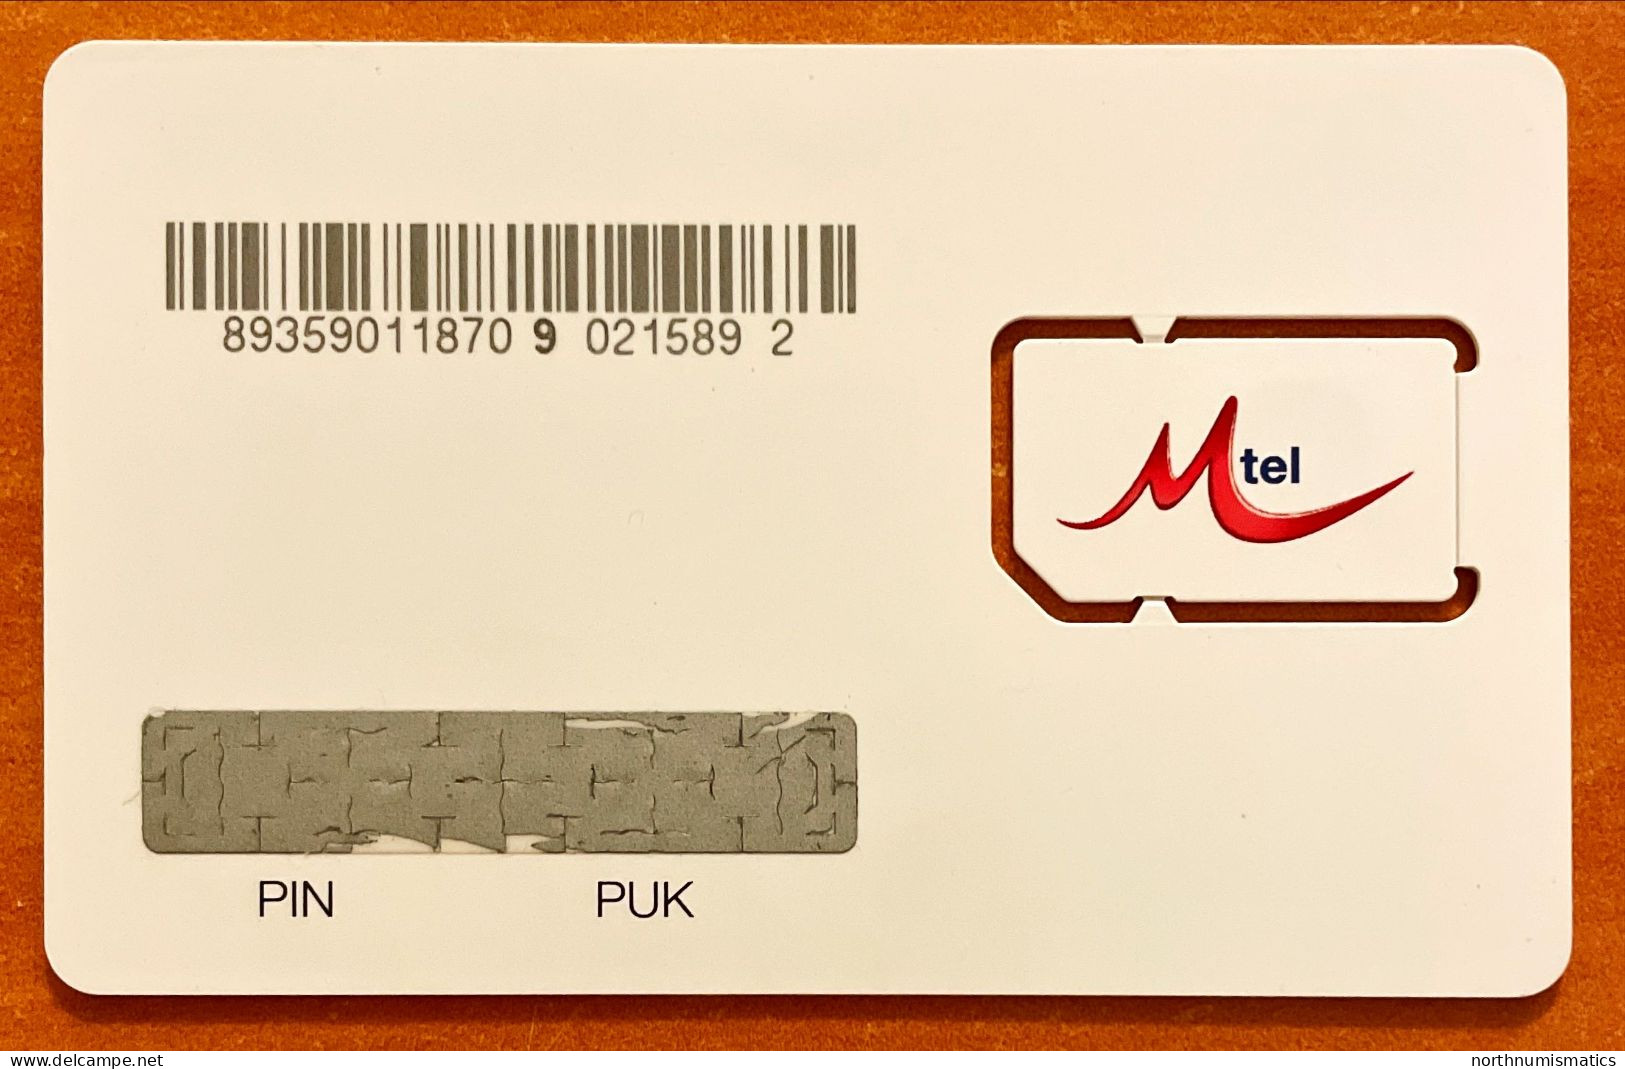 Mtel  Gsm  Original Chip Sim Card Unused - Lots - Collections